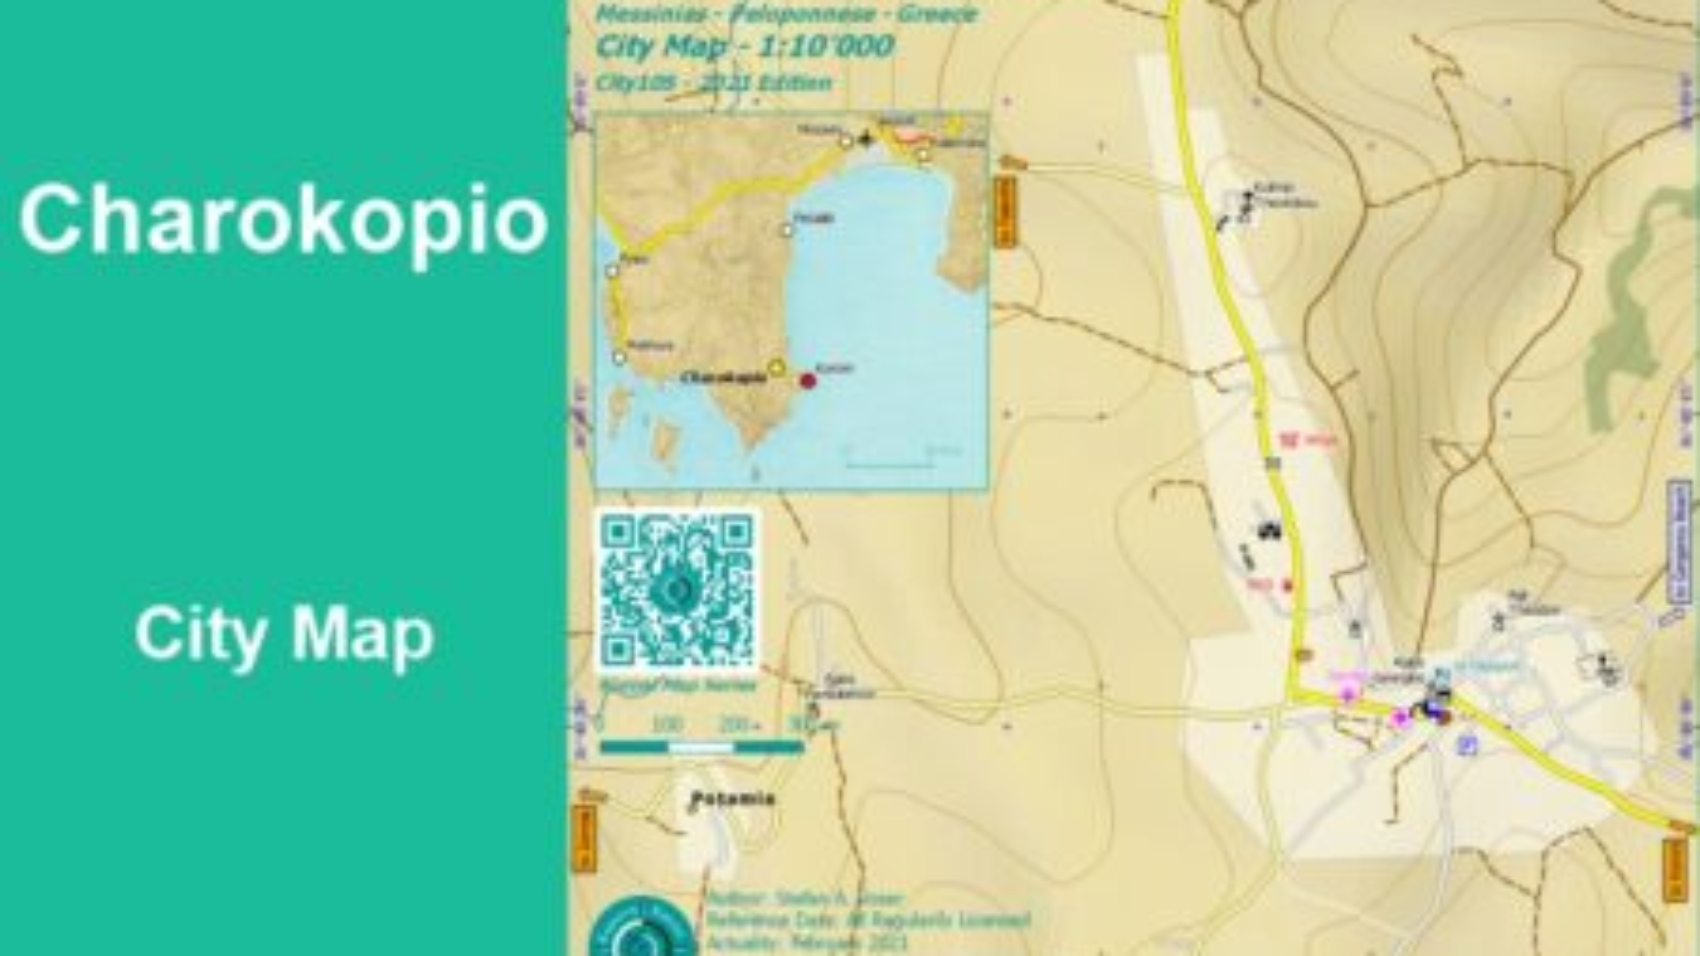 Charokopio City Map